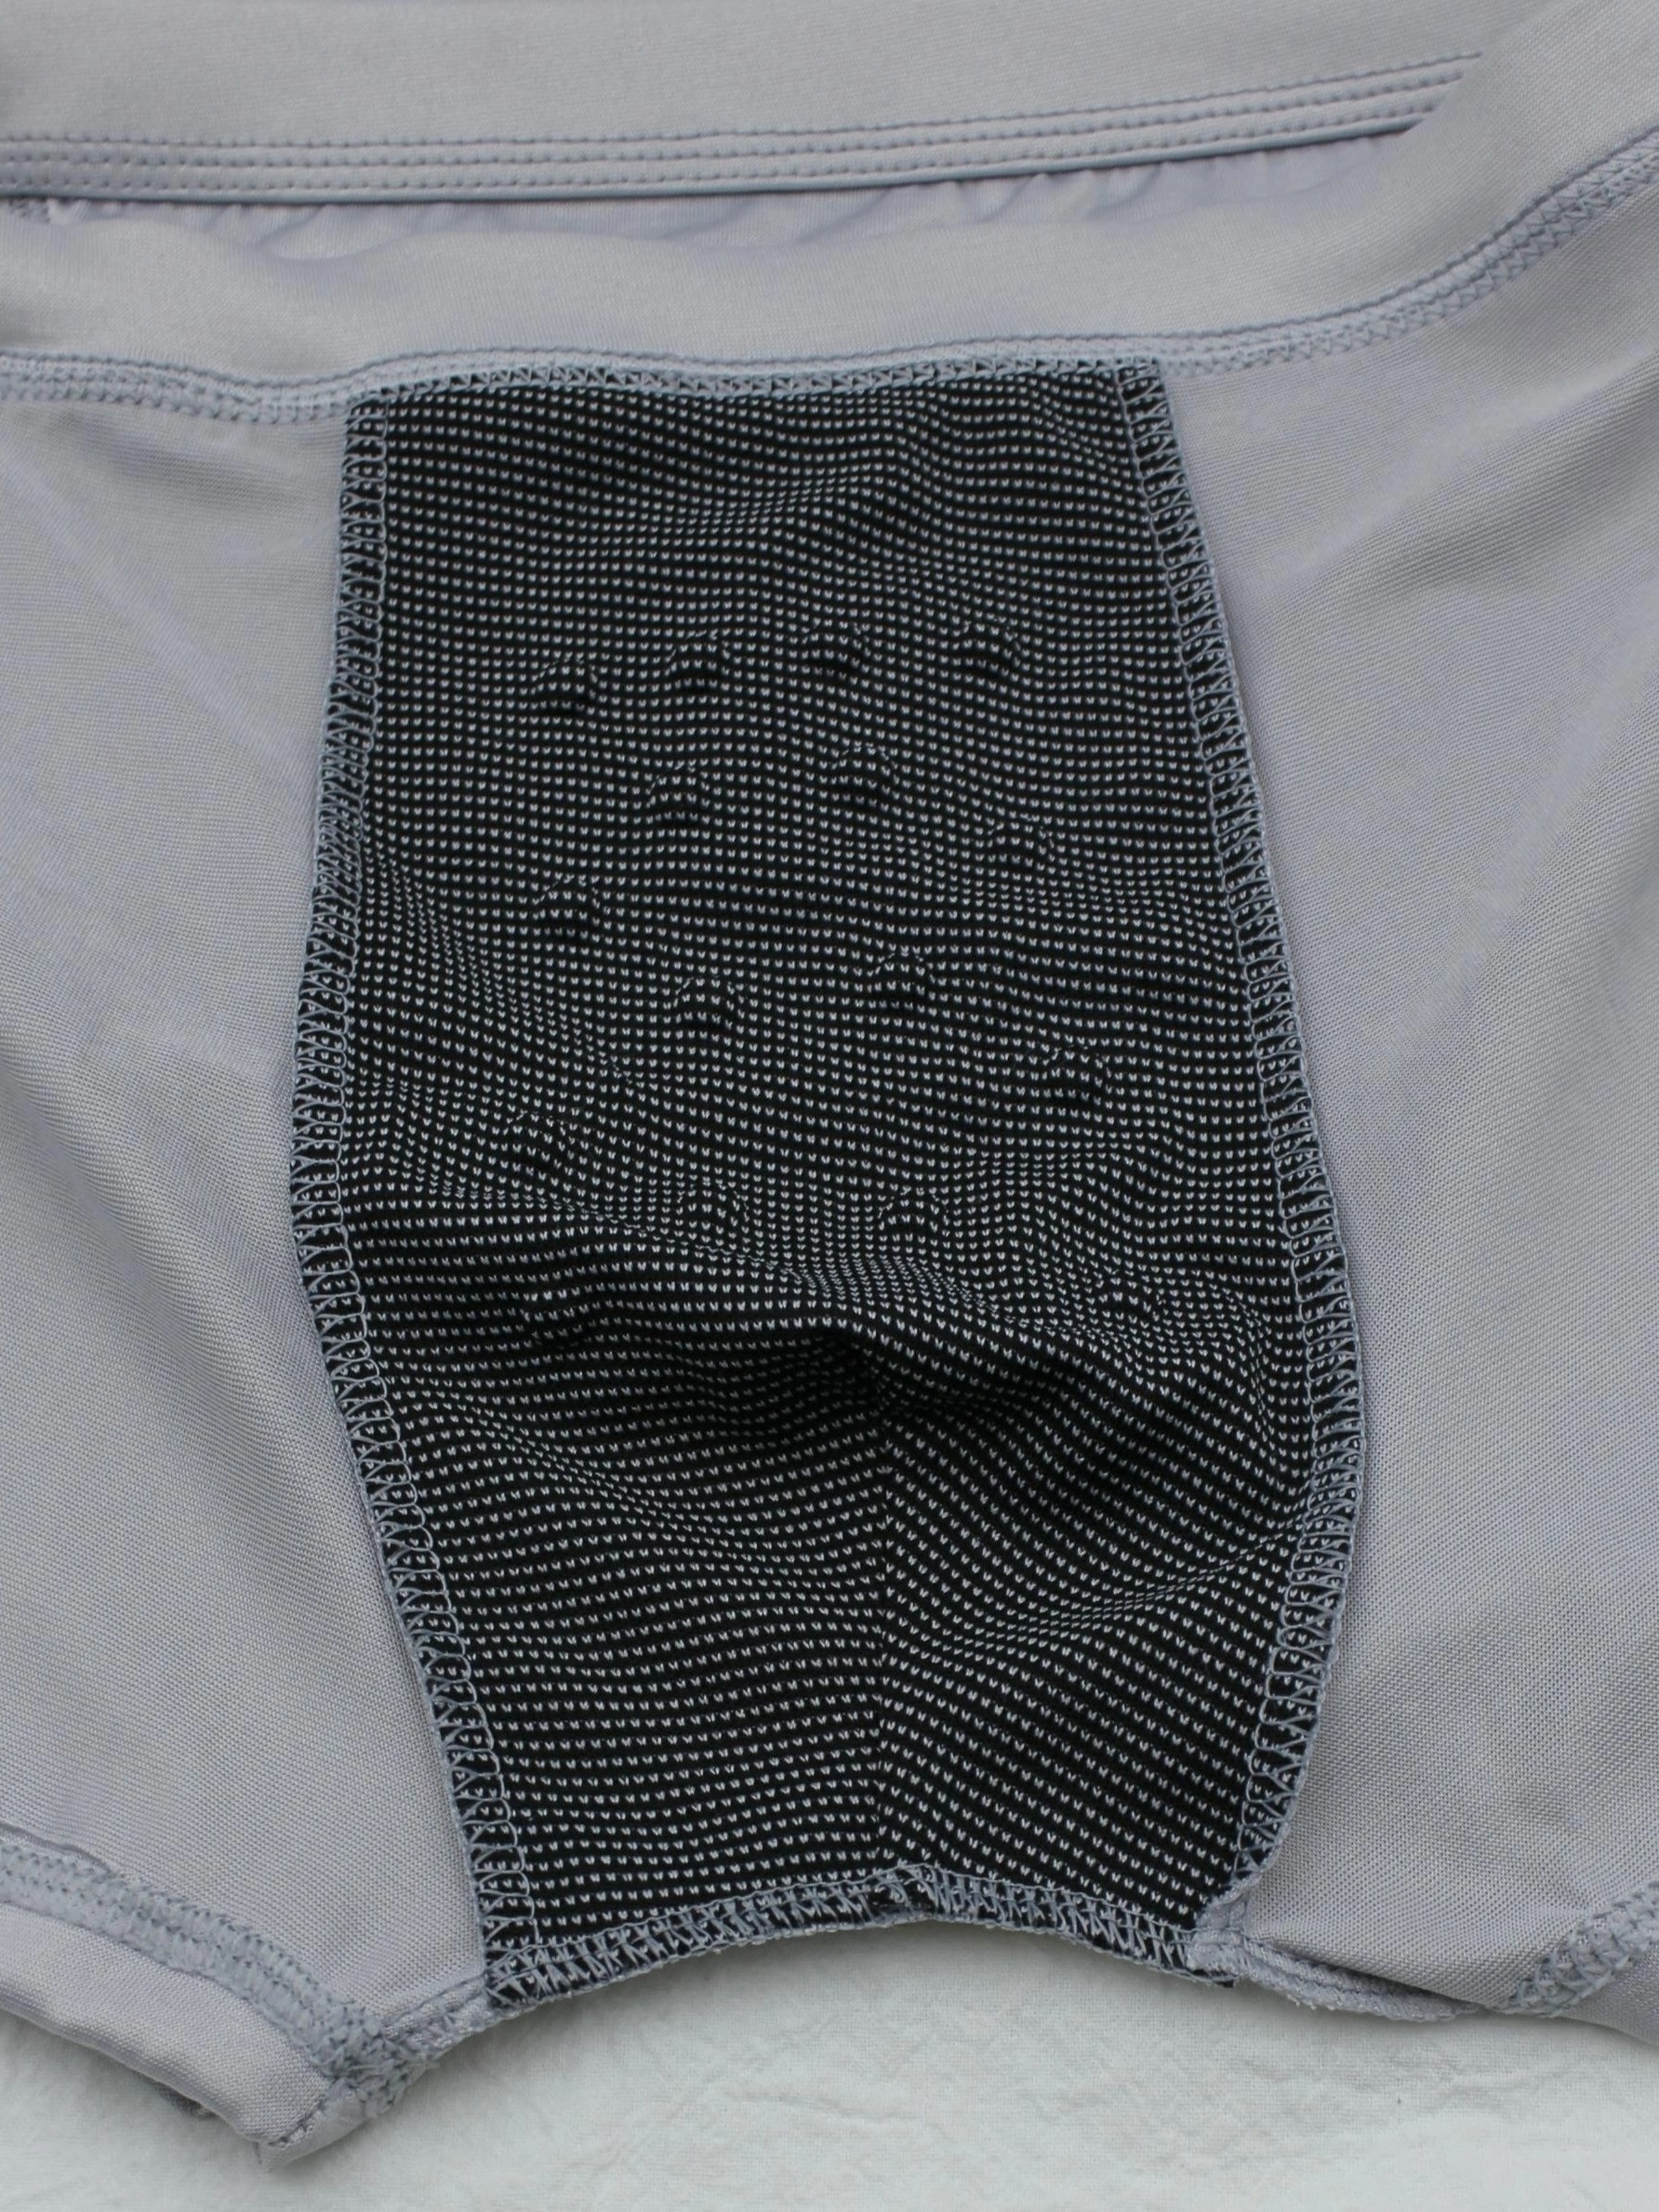 nsendm Mens Underpants Adult Male Underpants Underwear Boxers Men Magnetic  Strong Painted Briefs U- Men's Tourmaline Briefs Boxer Men's underwear Men  Shorts(Grey,3XL) 